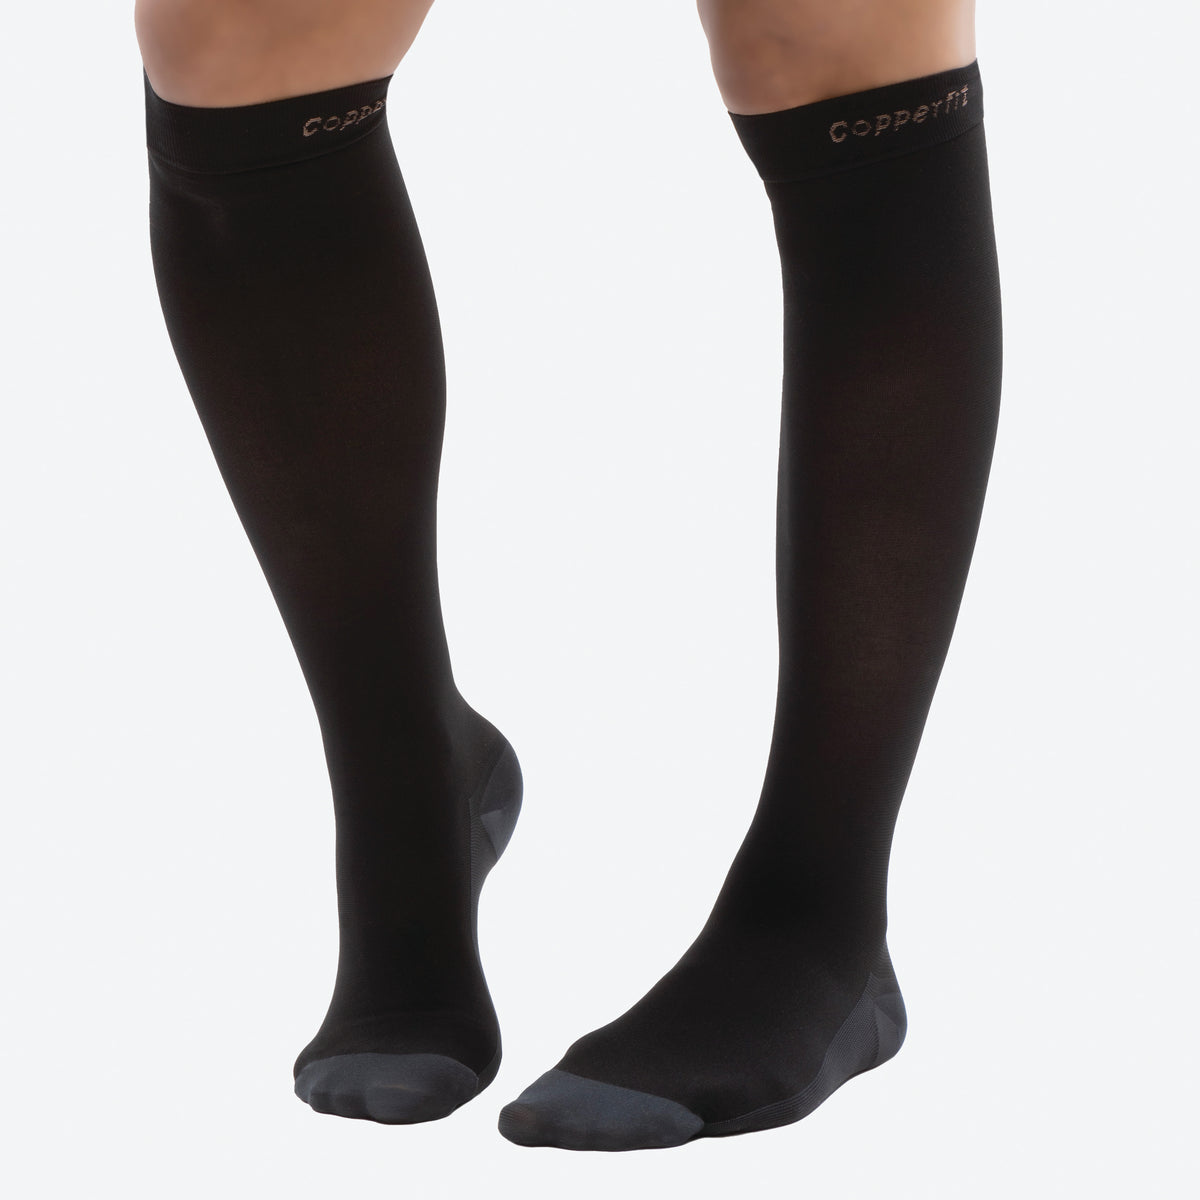 Unisex Men Medical Compression Socks Opaque Tights,best Support 30